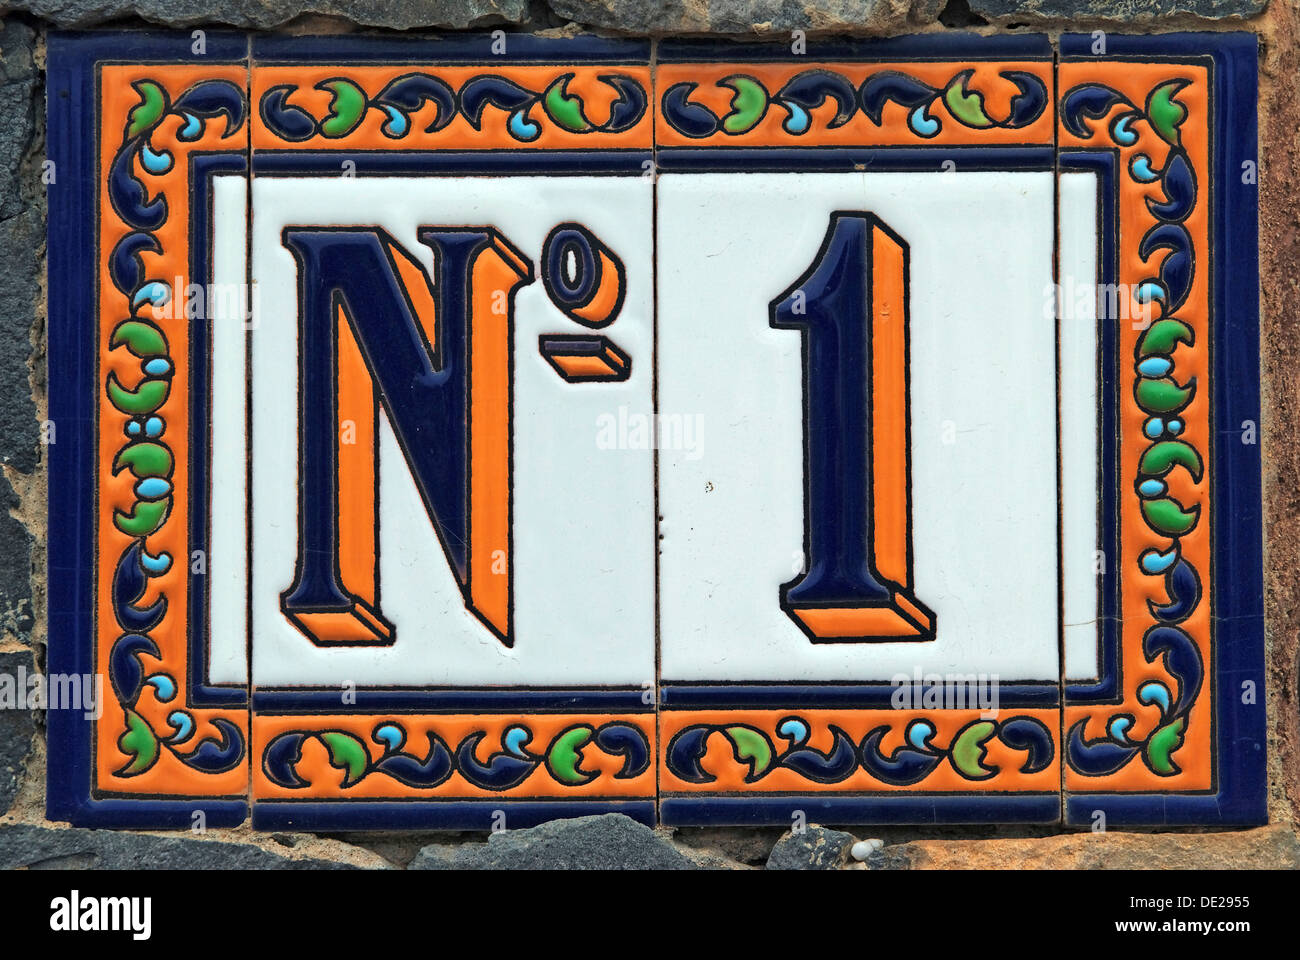 No. 1, street number on ceramic tiles, Tenerife island, Canary Islands, Spain, Europe Stock Photo